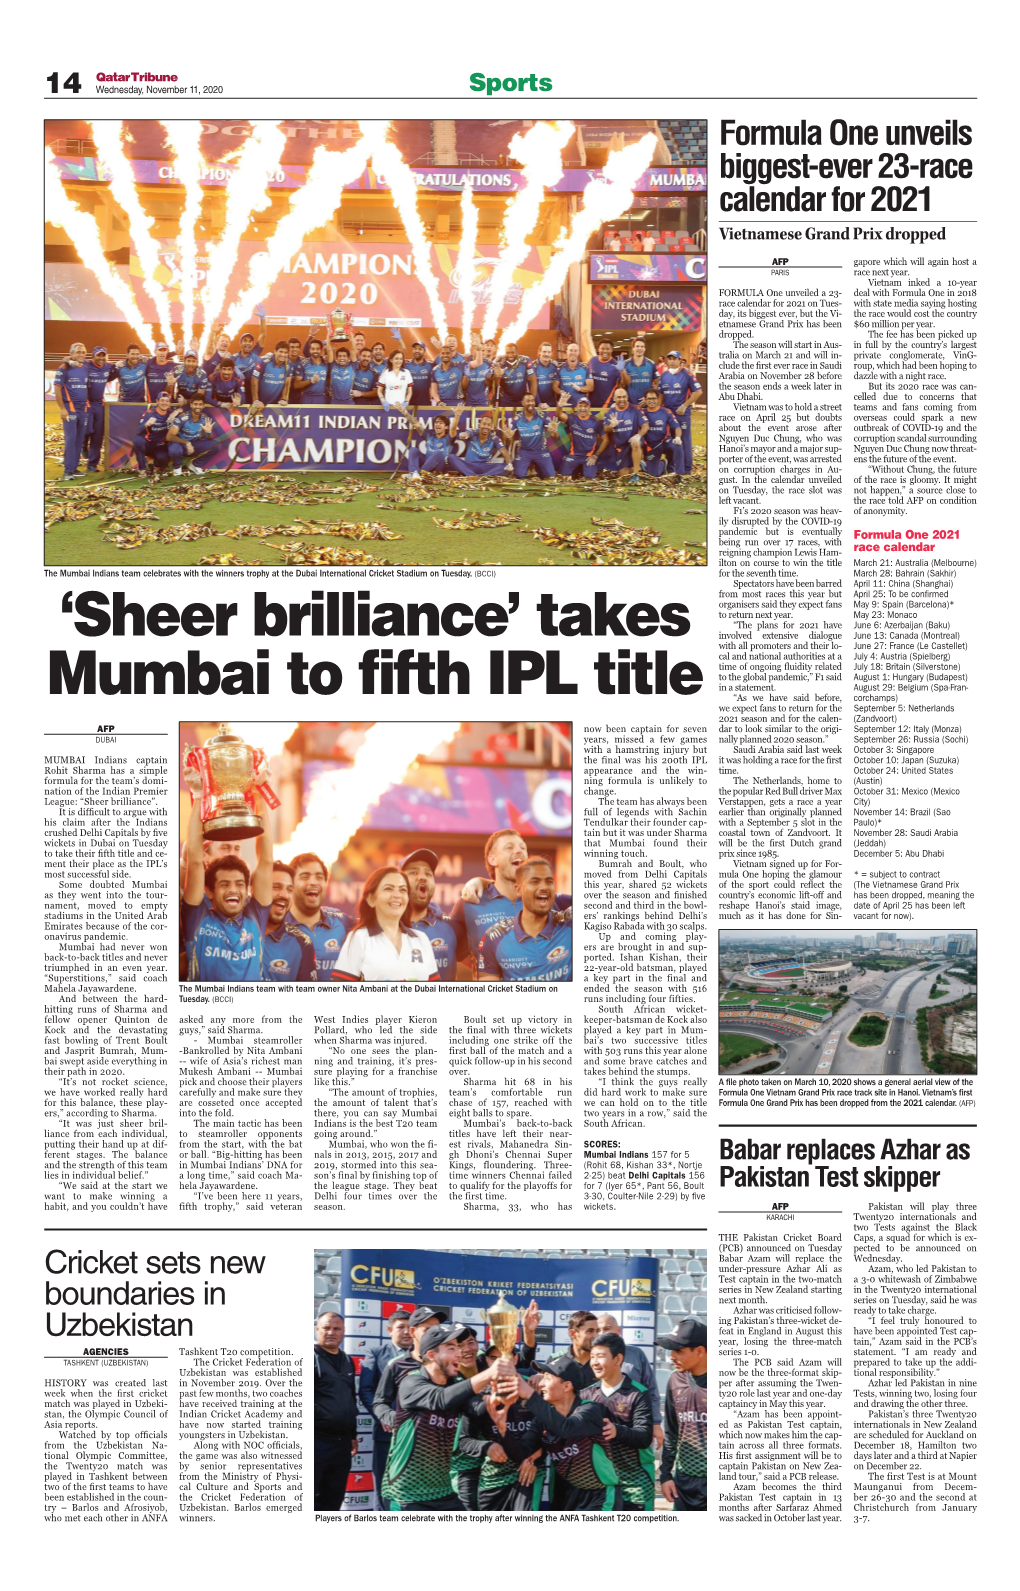 'Sheer Brilliance' Takes Mumbai to Fifth IPL Title